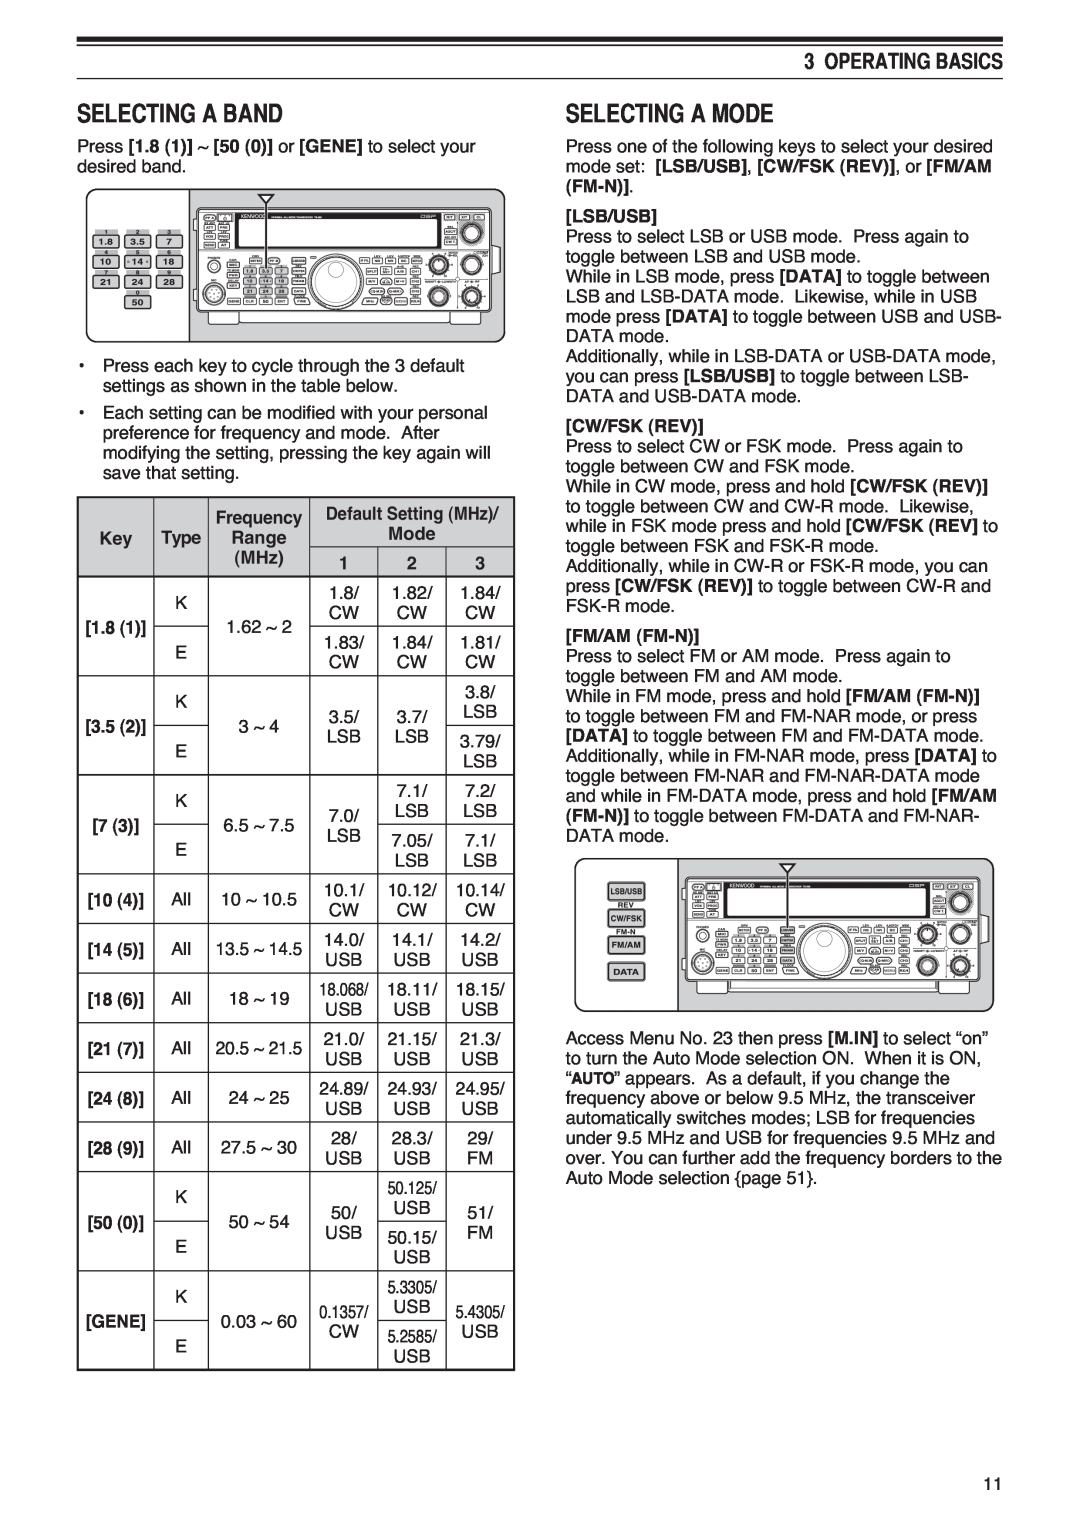 Kenwood TS-590S instruction manual 6/&7,1*$%$1, 6/&7,1*$02, 235$7,1*%$6,&6 